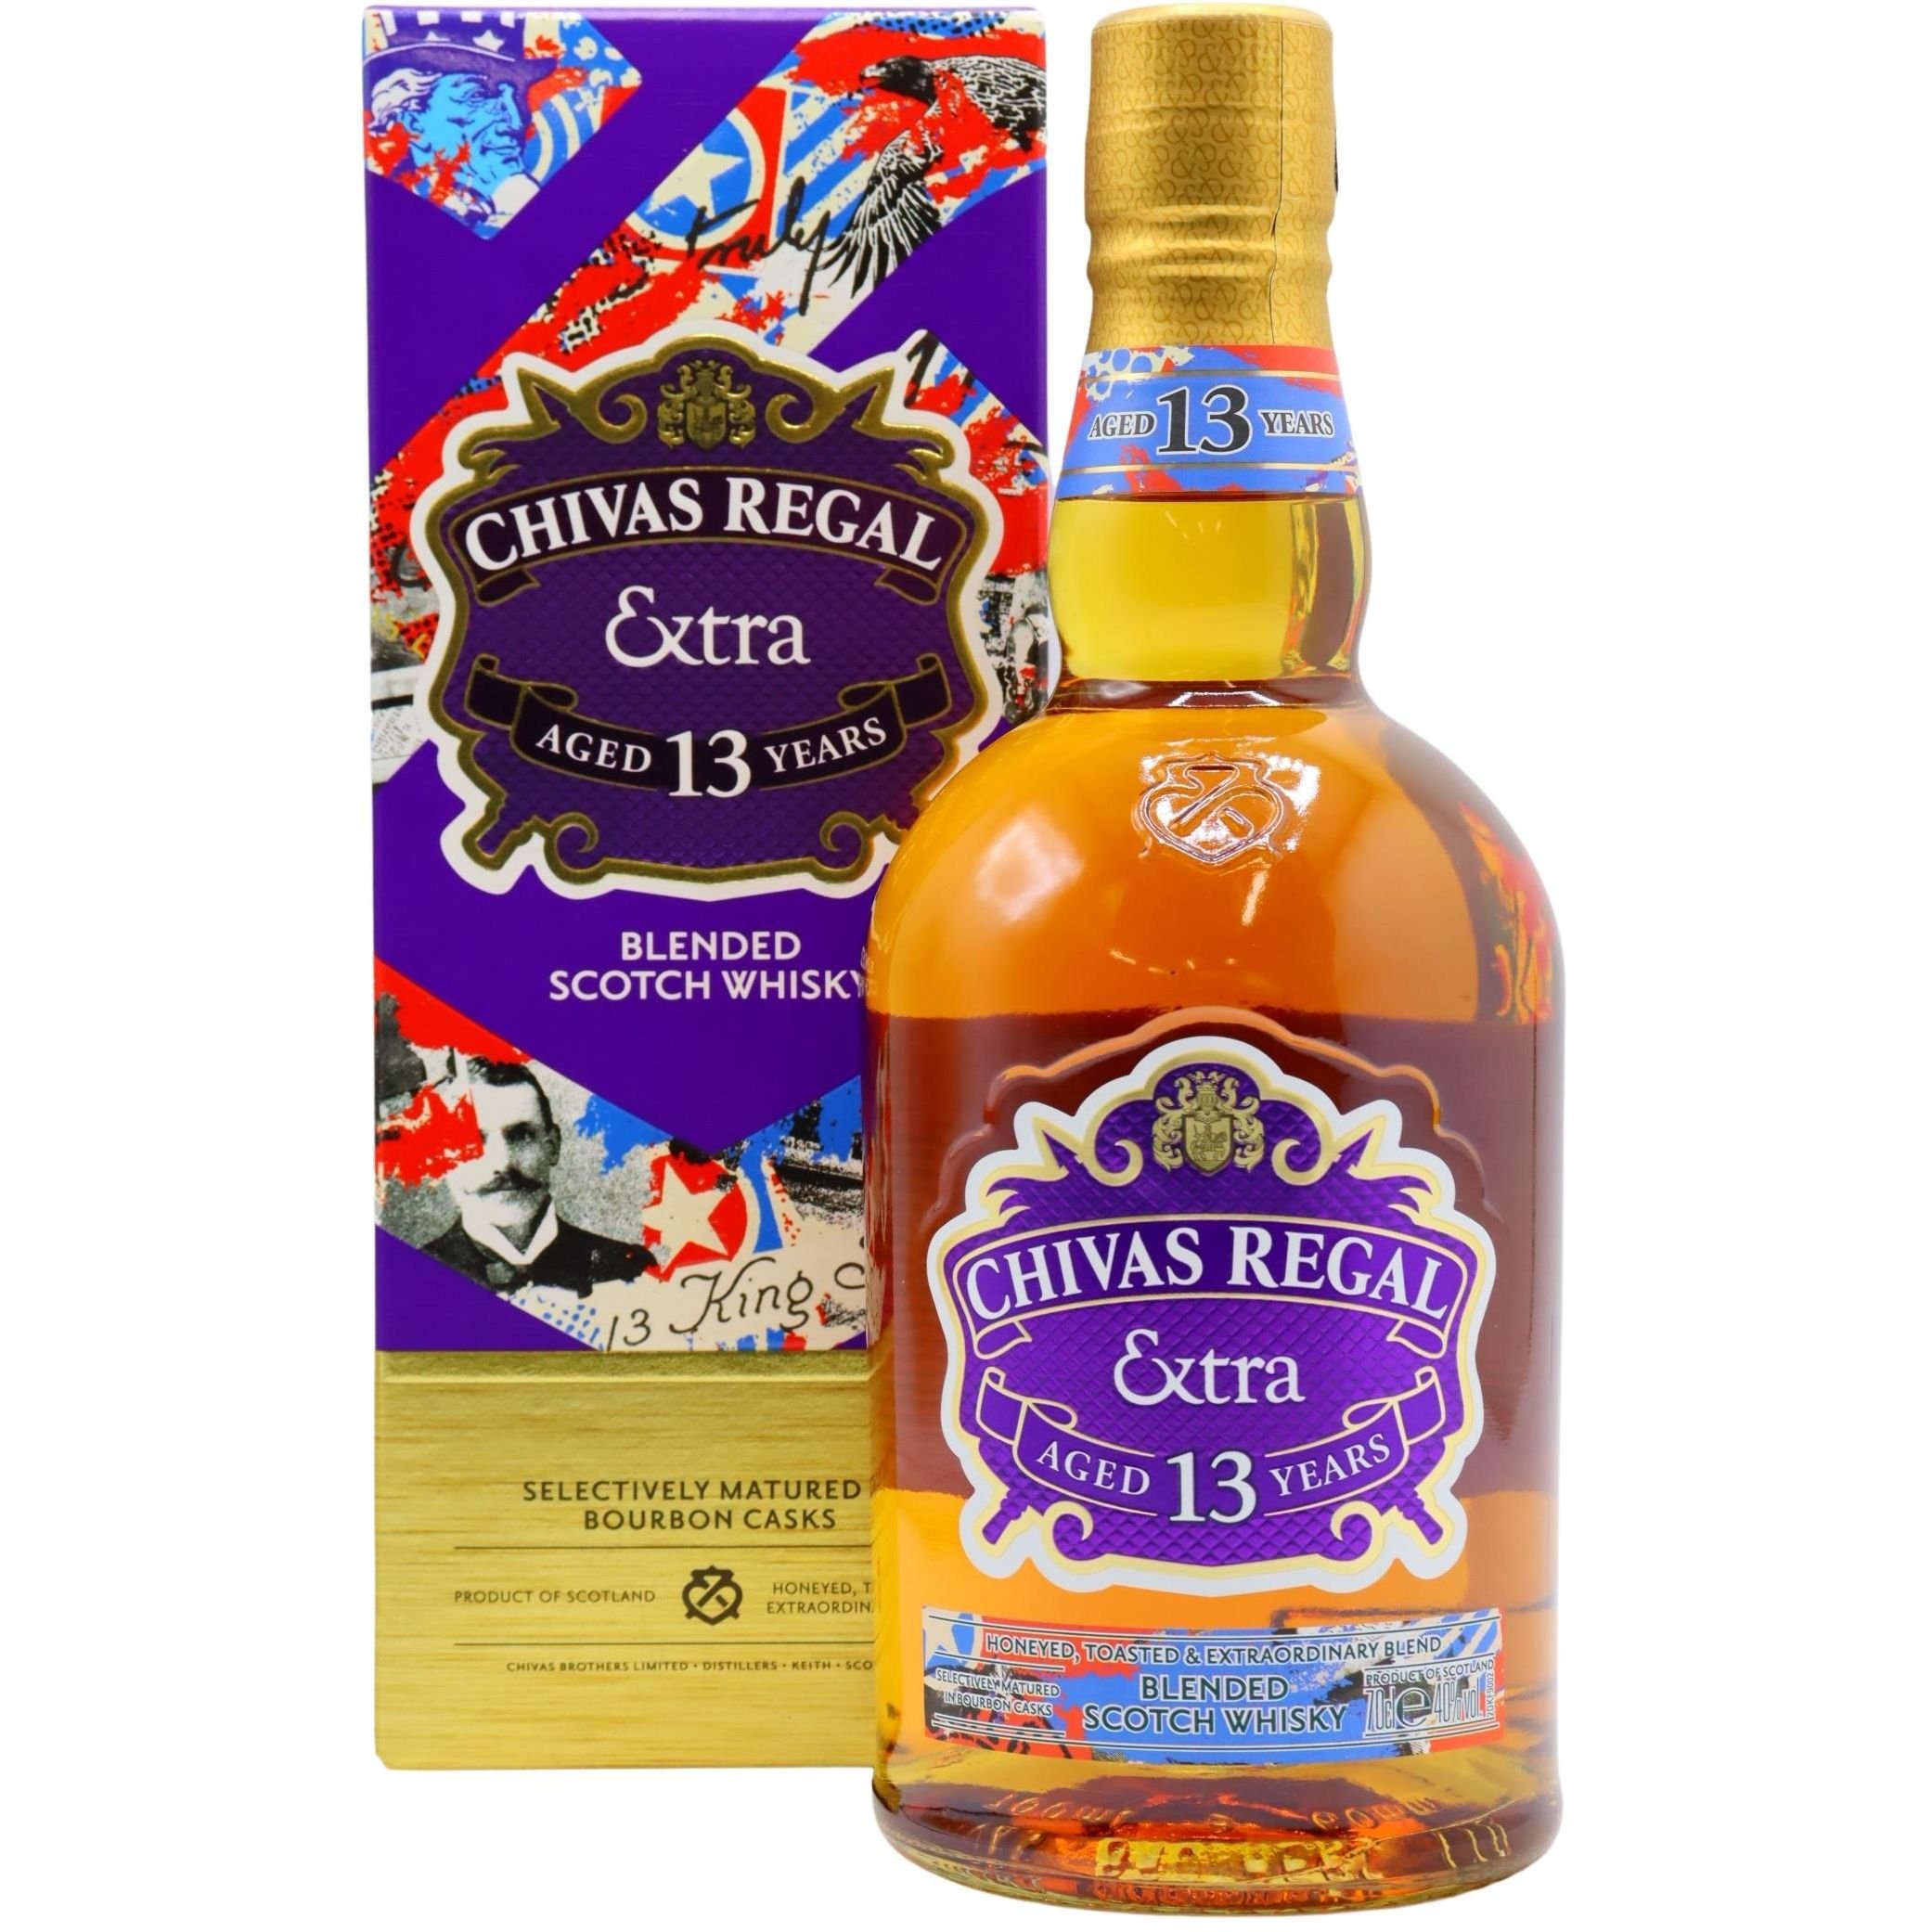 Віскі Chivas Regal Extra Bourbon Cask Select 13 yo Blended Scotch Whisky 40% 0.7 л, у подарунковій упаковці - фото 1